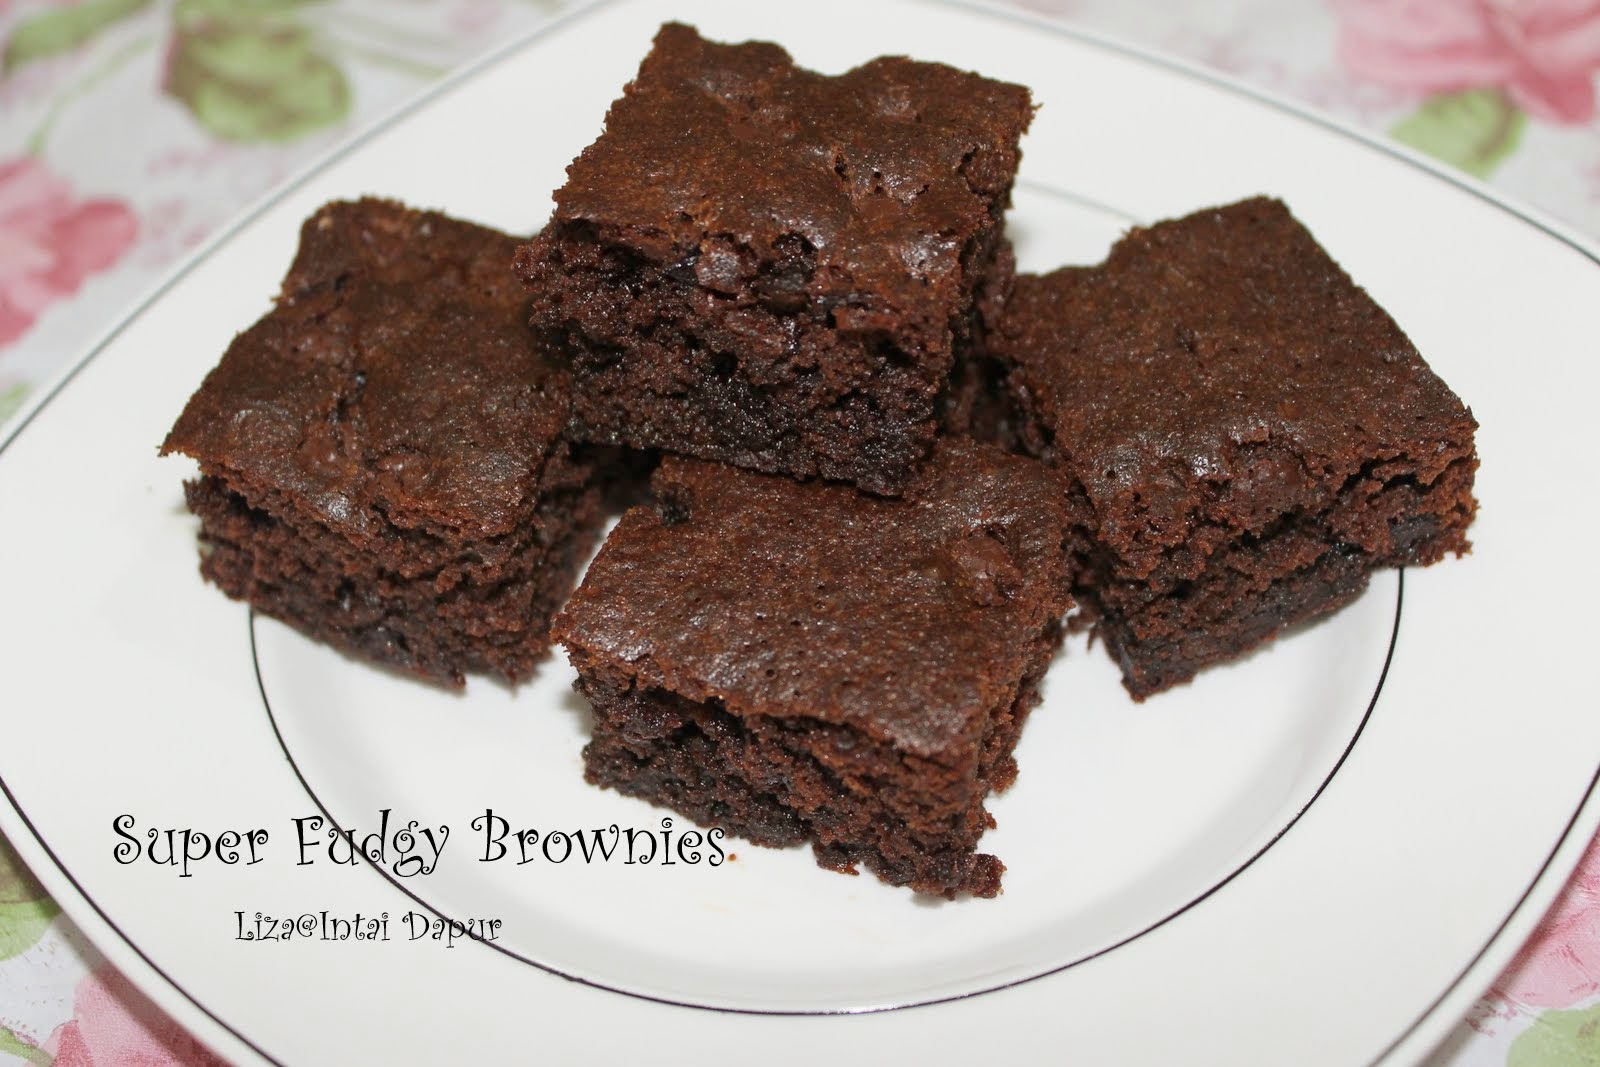 INTAI DAPUR: Super Fudgy Brownies